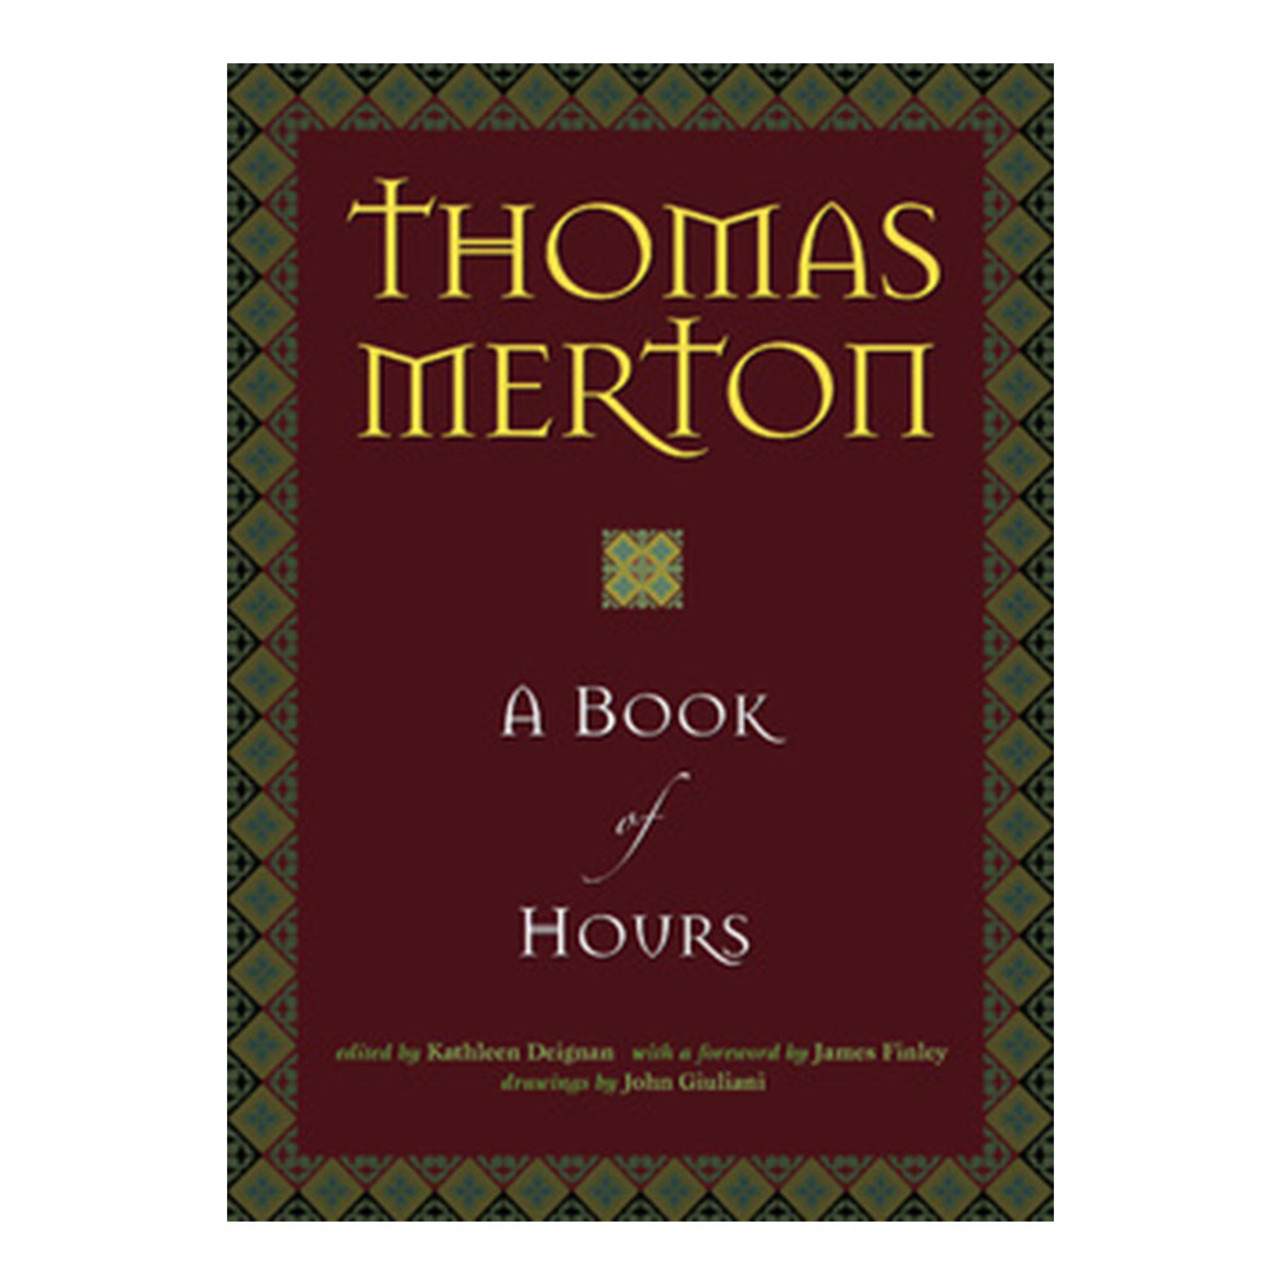 A Book of Hours - Thomas Merton Writings Edited by Kathleen Deignan